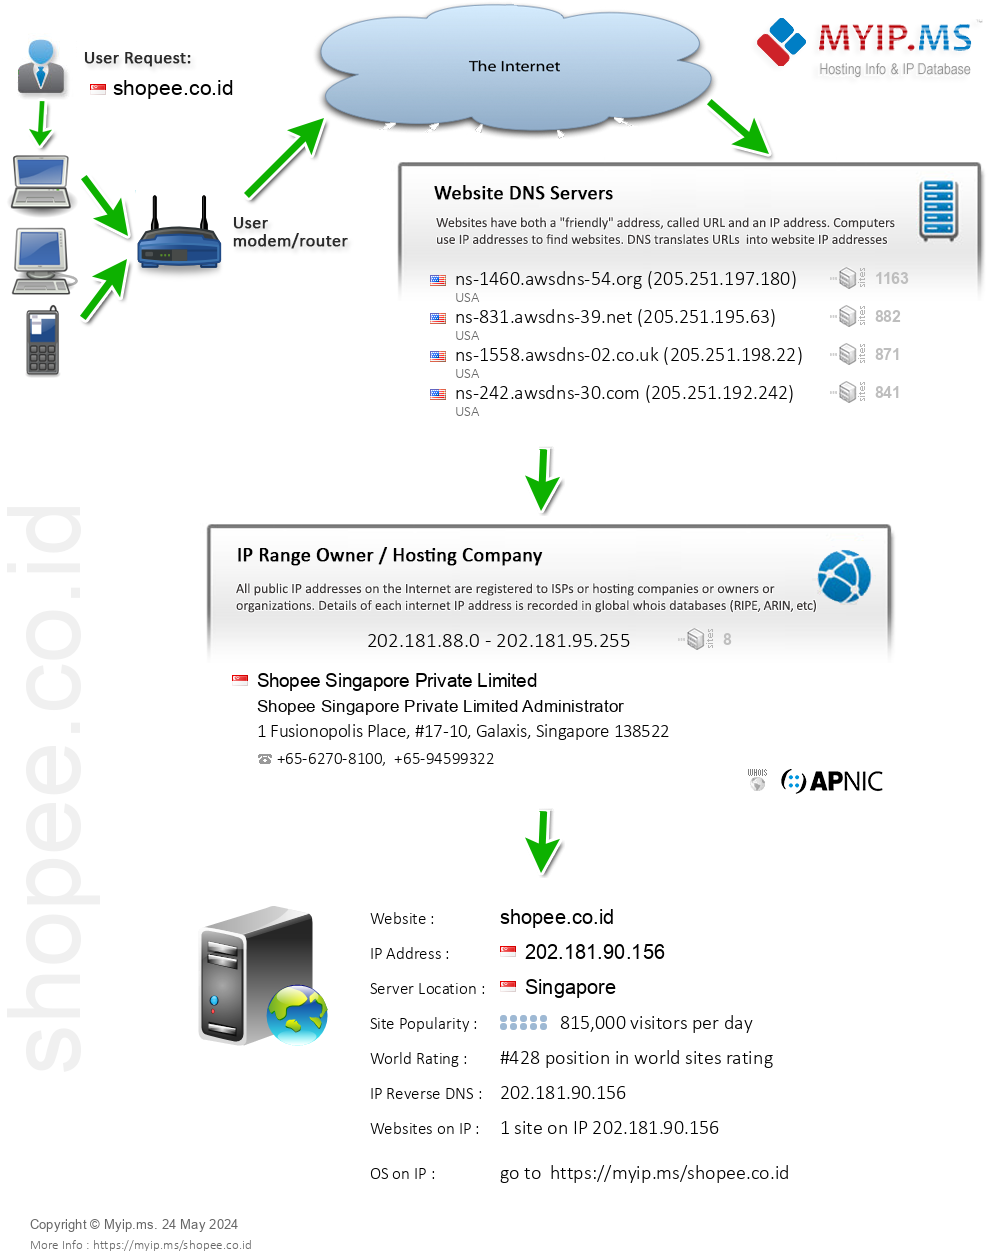 Shopee.co.id - Website Hosting Visual IP Diagram